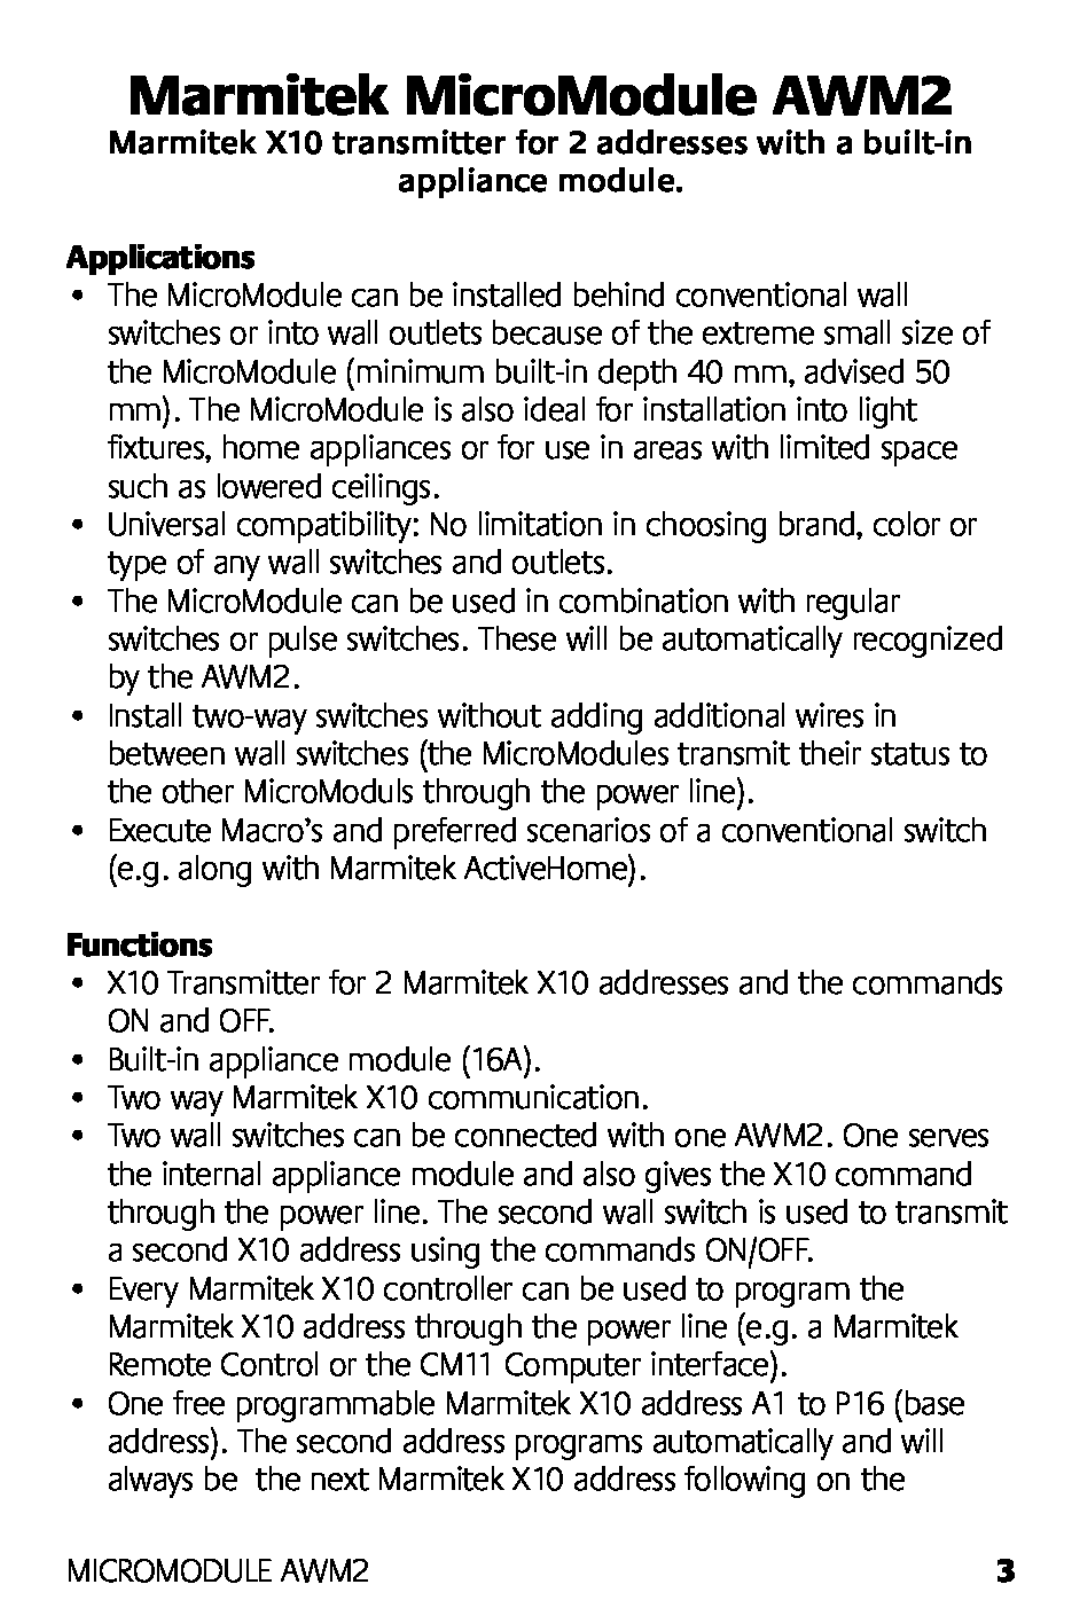 Marmitek manual Marmitek MicroModule AWM2, appliance module Applications, Functions, MICROMODULE AWM2 